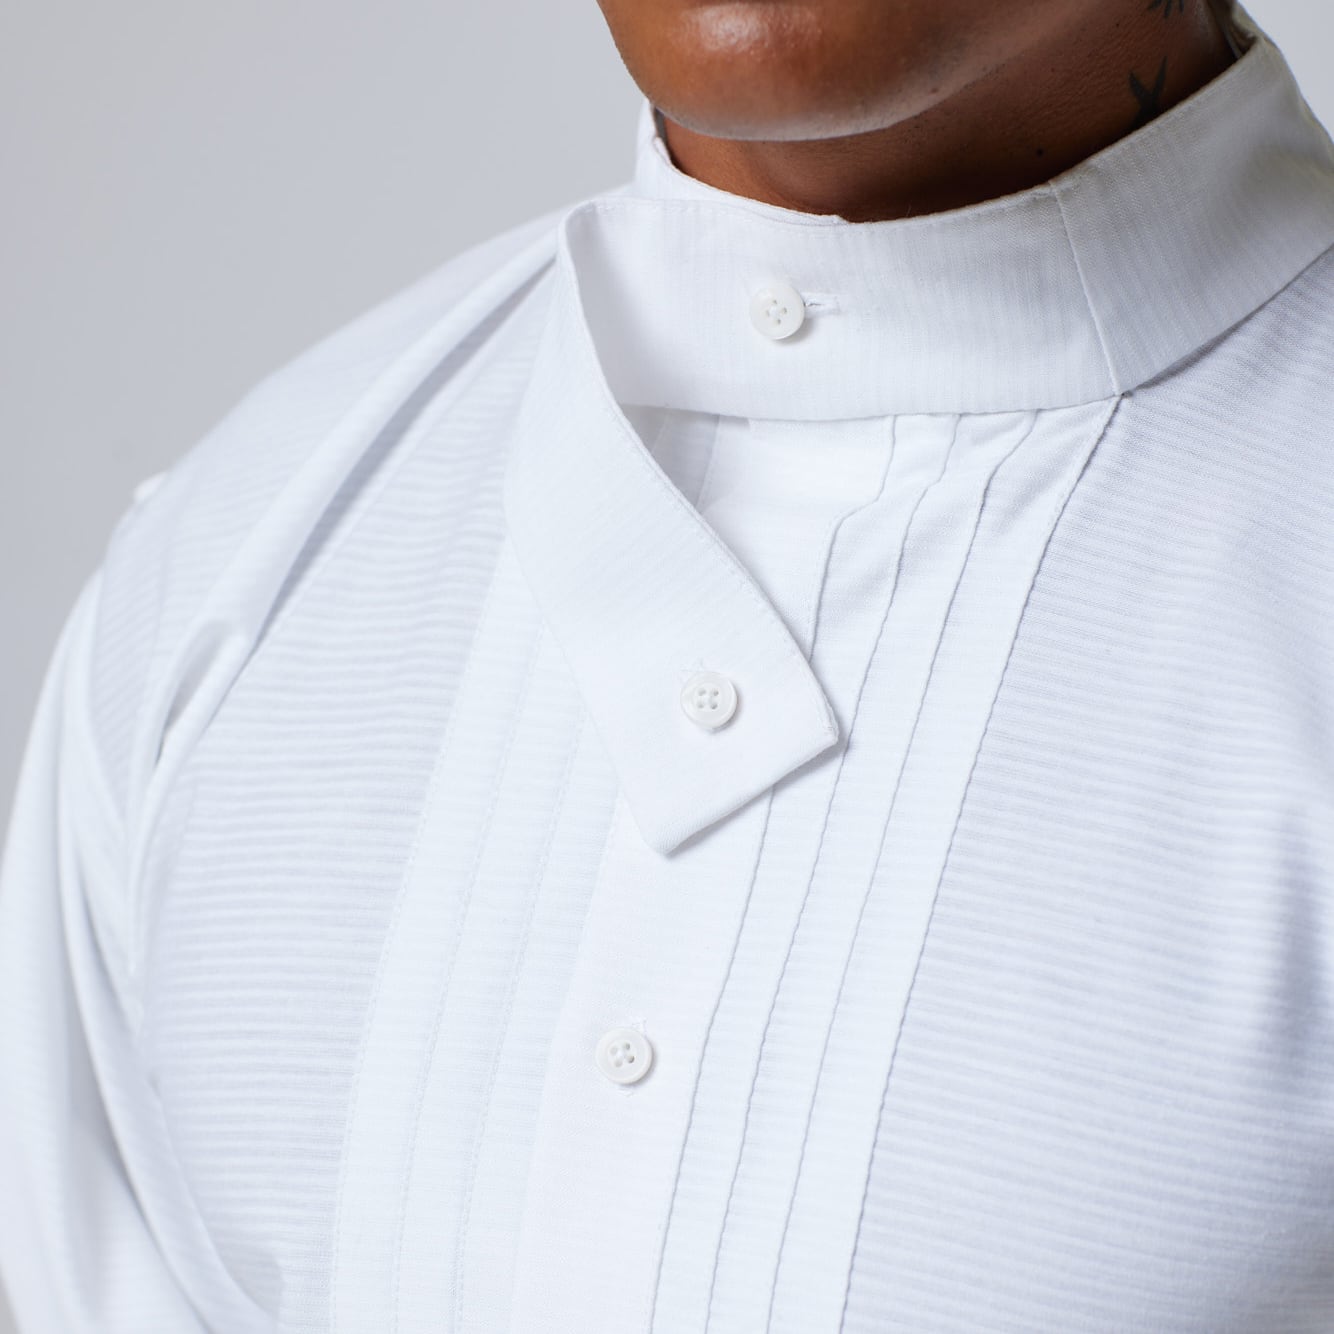 ZERØ London - Close up, White mens dress shirt, zero waste fashion, designed & made in London